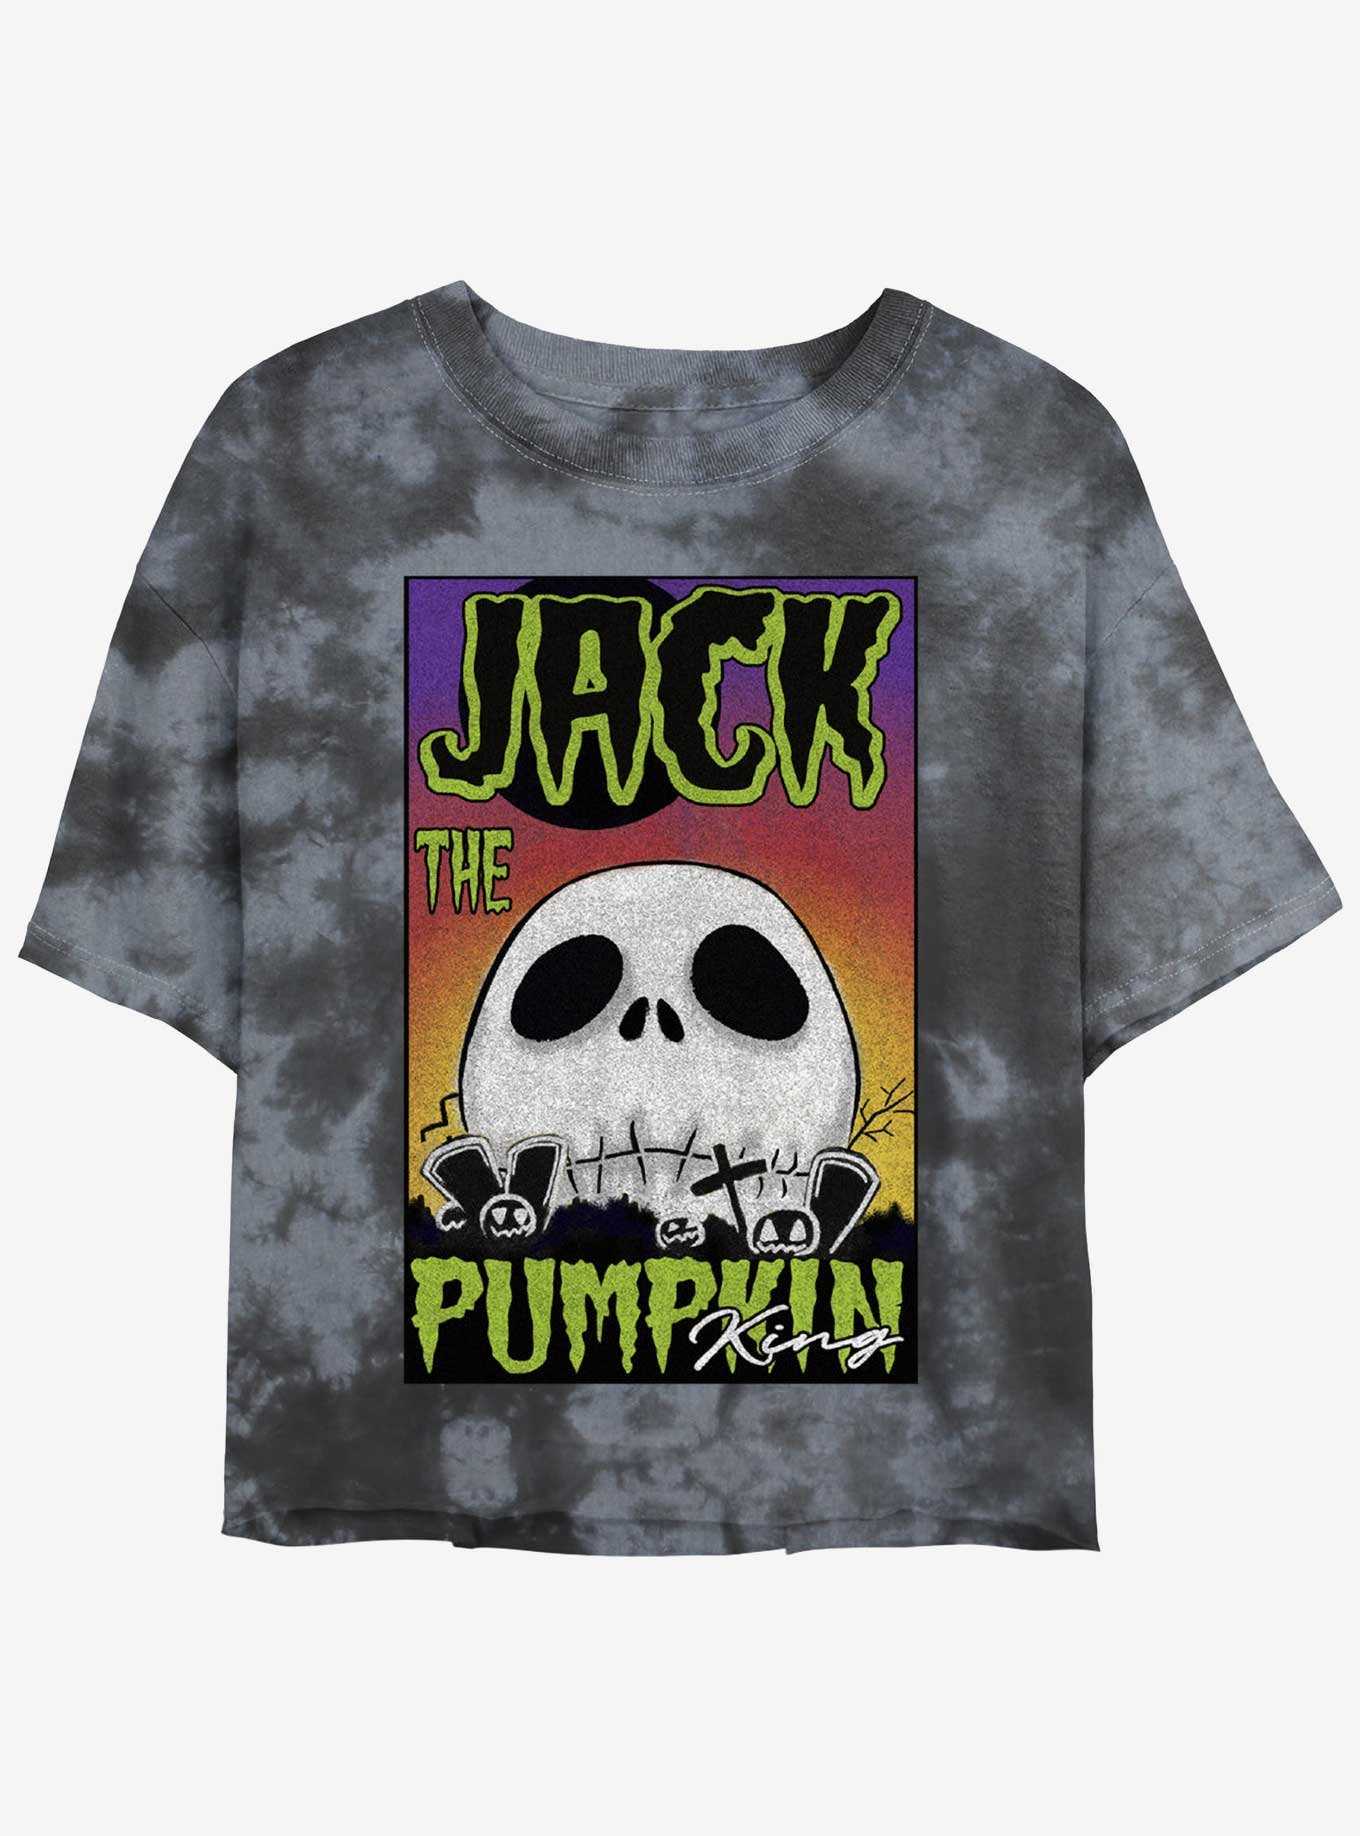 Disney The Nightmare Before Christmas Jack The Pumpkin King Skull Poster Tie-Dye Girls Crop T-Shirt, , hi-res